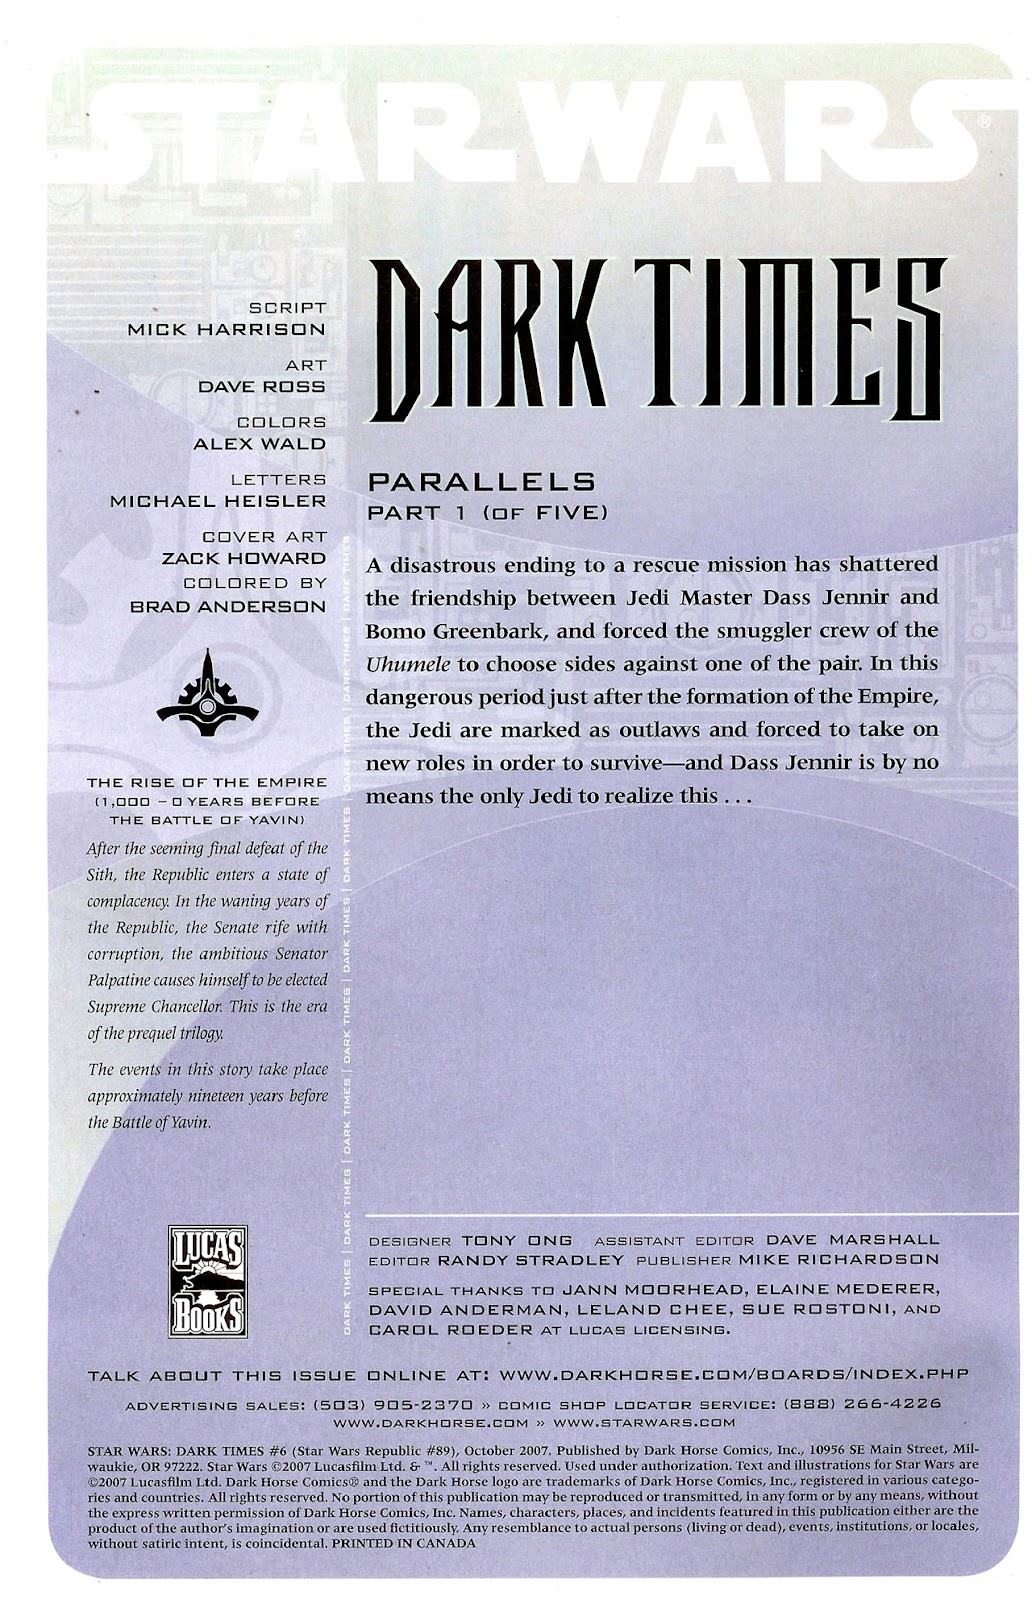 Star Wars: Dark Times issue 6 - Parallels, Part 1 - Page 2